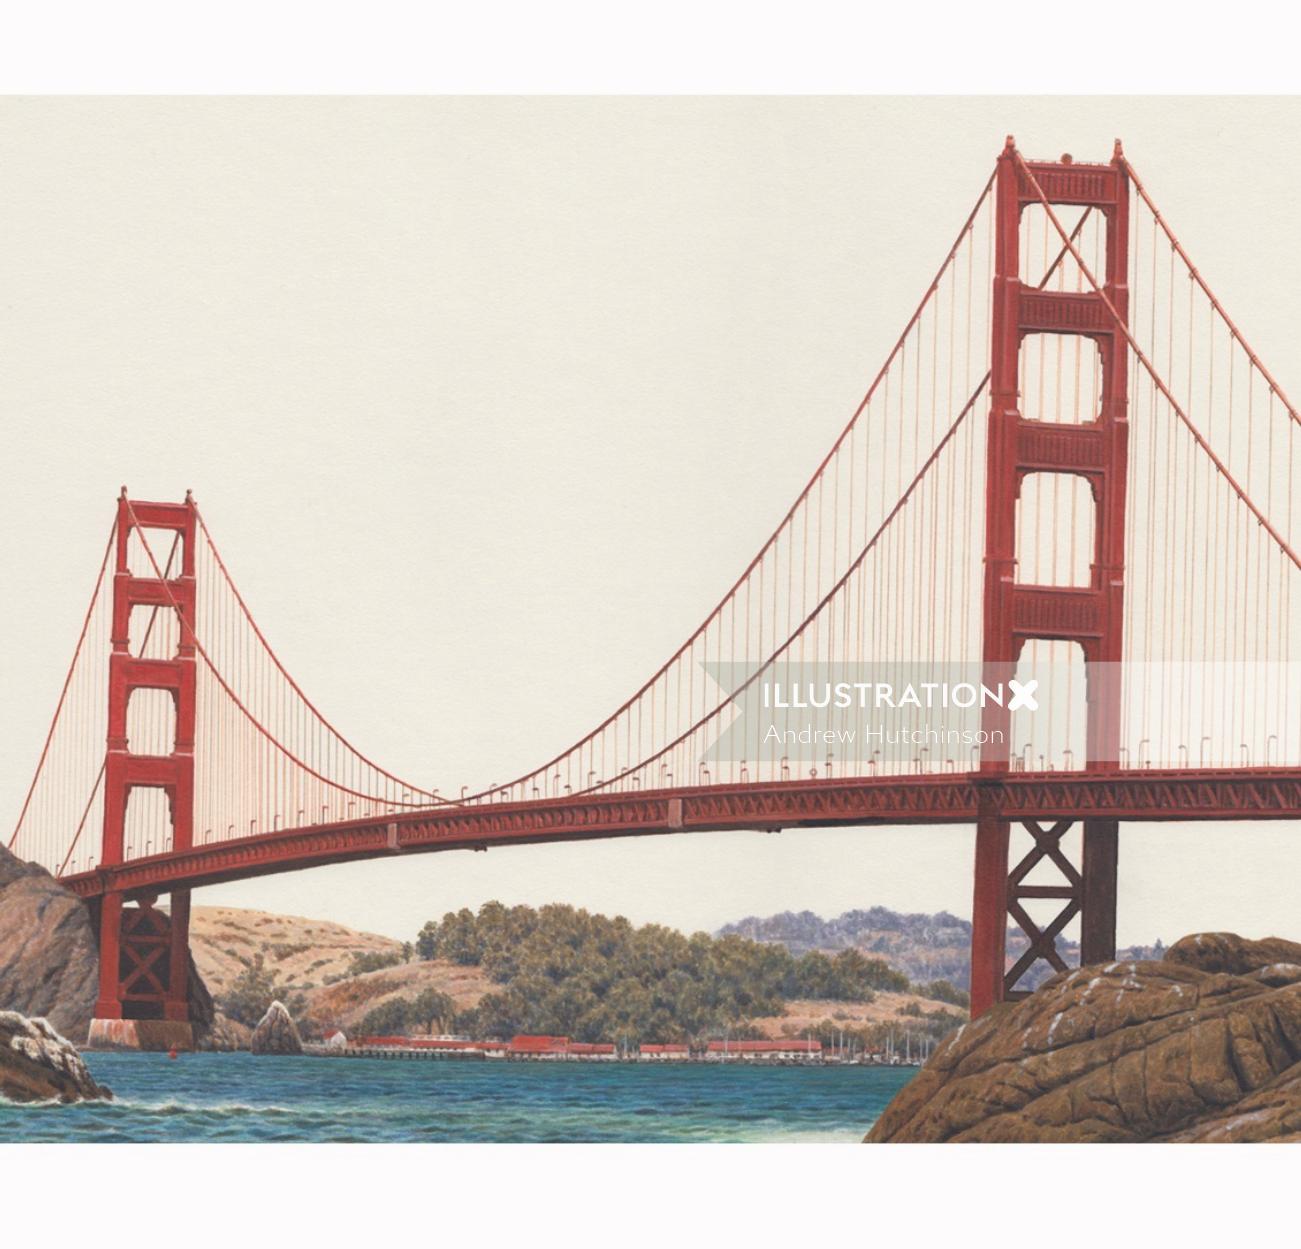 Golden Gate Bridge, shown realistically